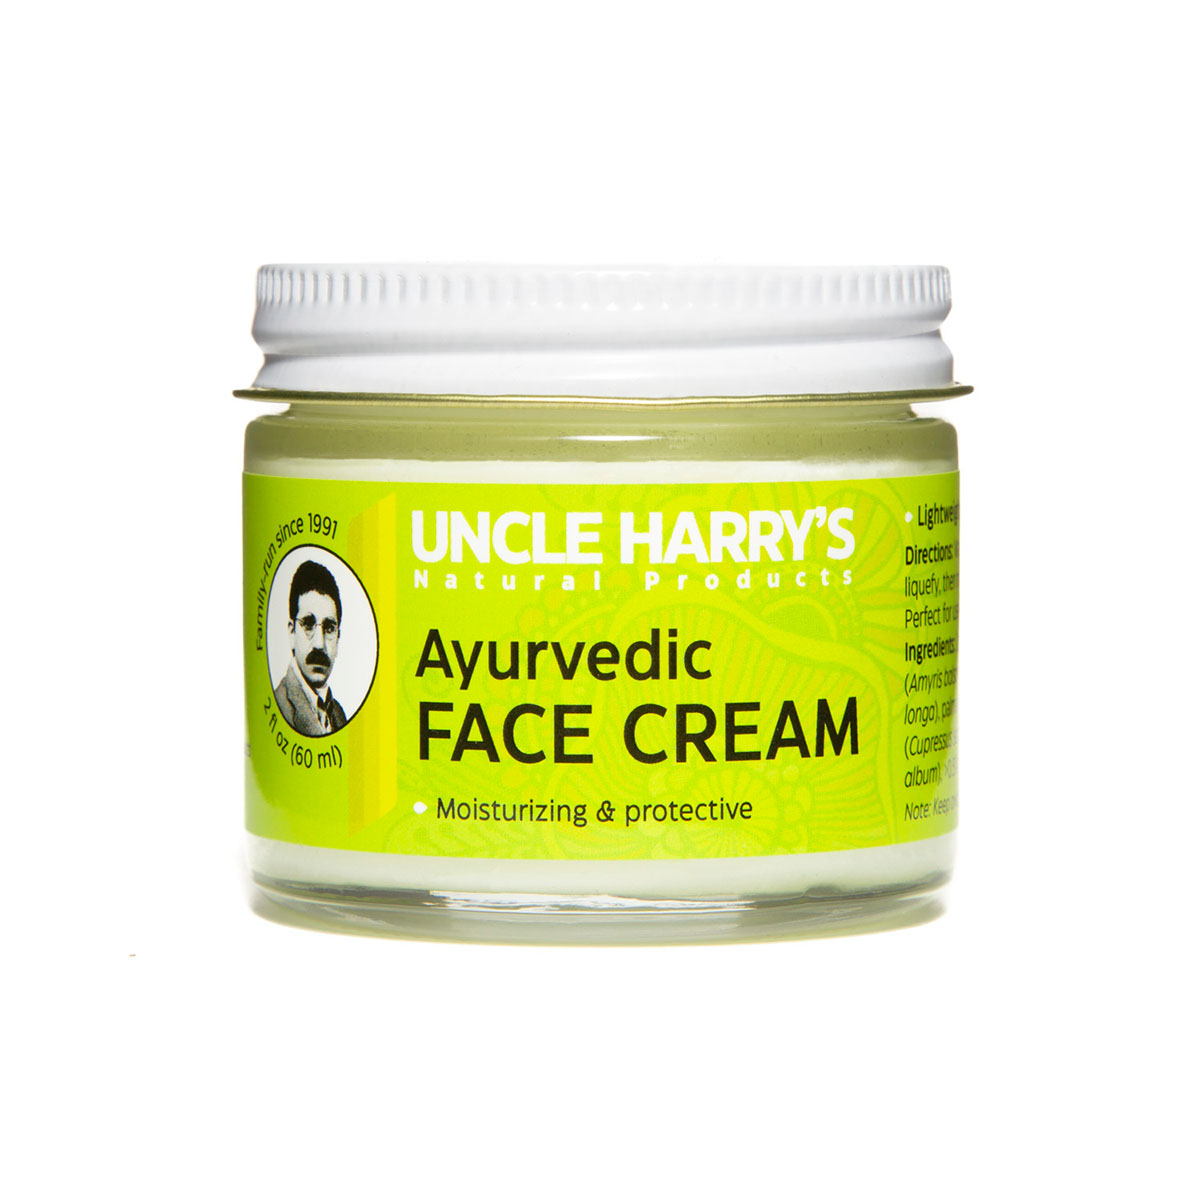 Ayurvedic Face Cream 2 fl oz glass jar